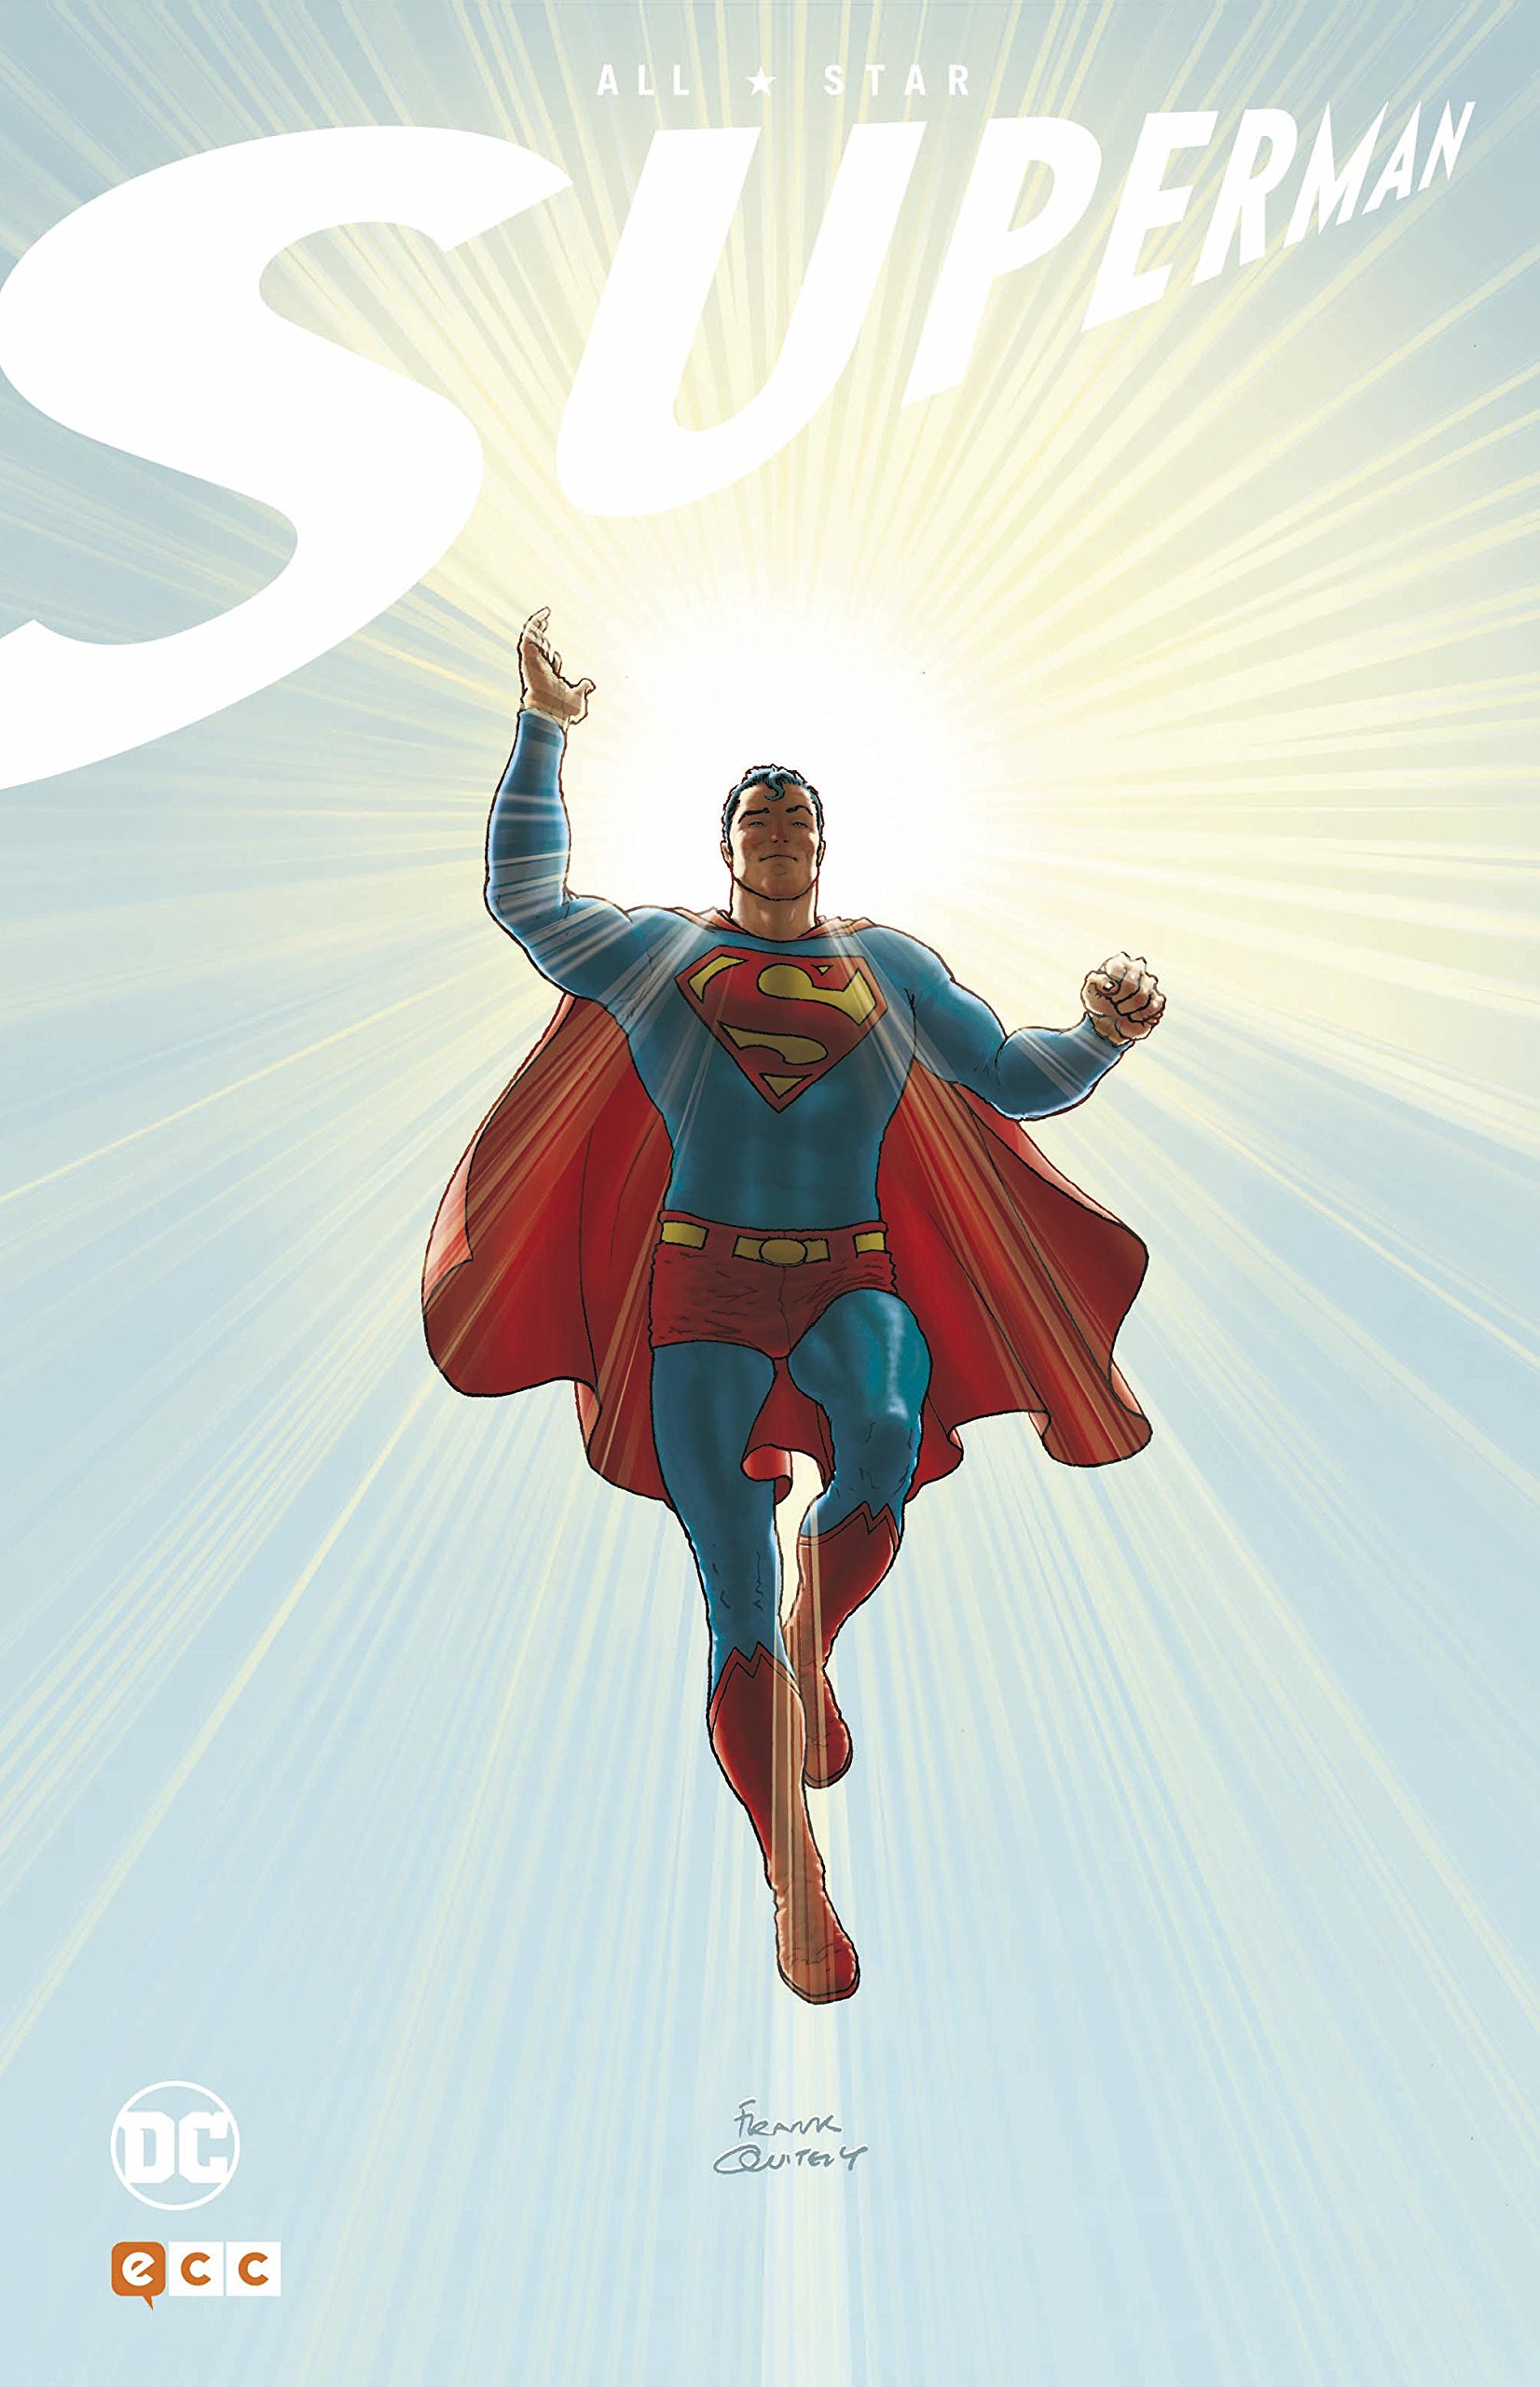 Frank Quitely, Grant Morrison: Absolute All-Star Superman (ecc)